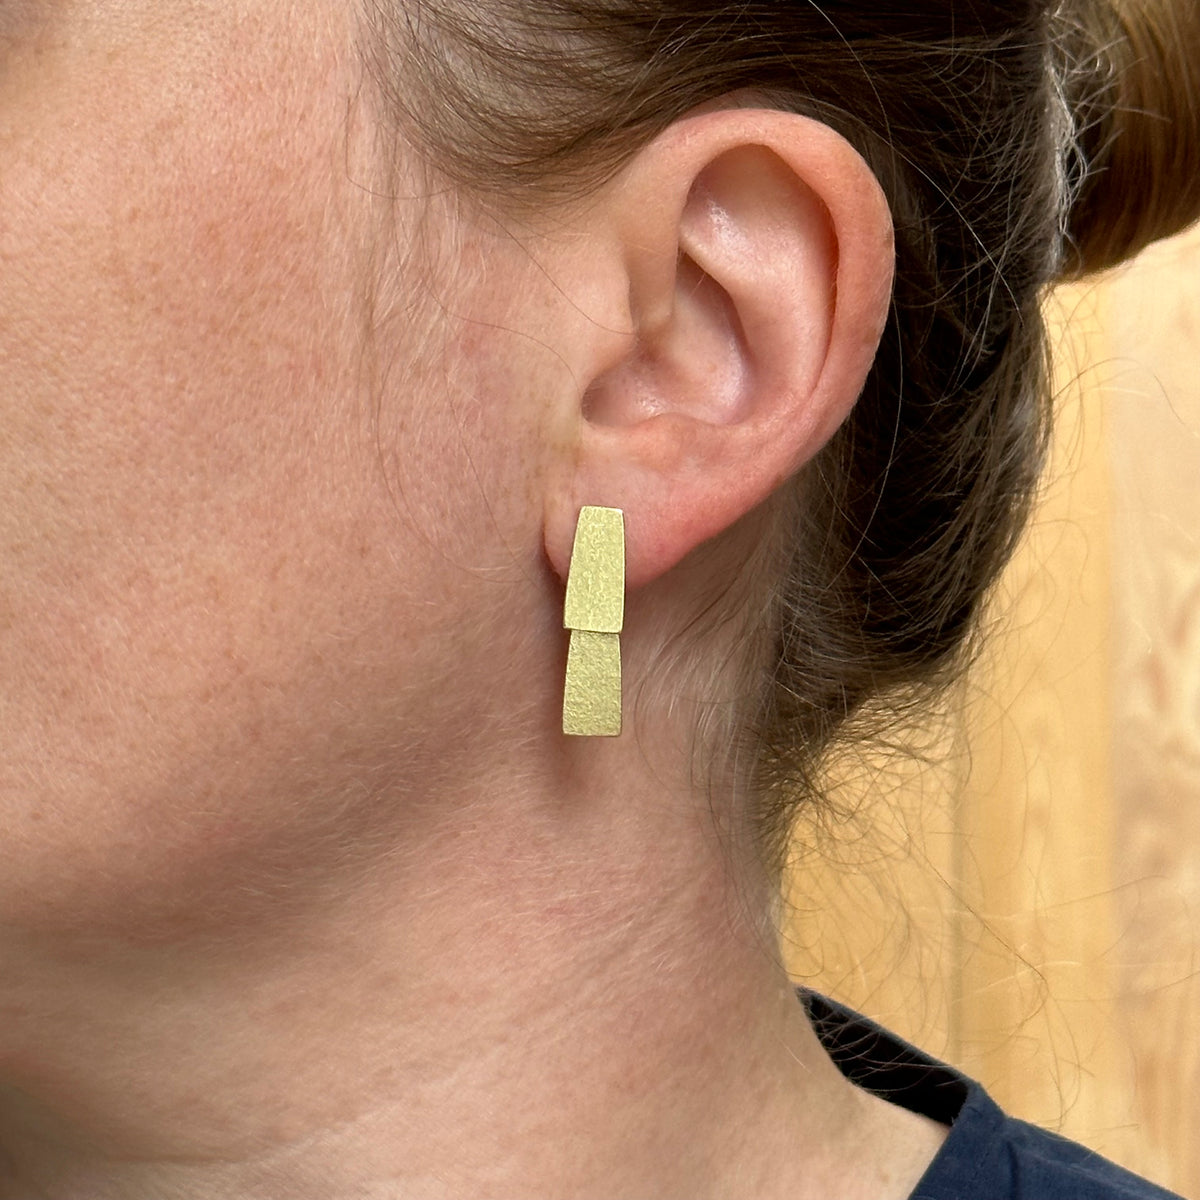 Two tier earrings - slim